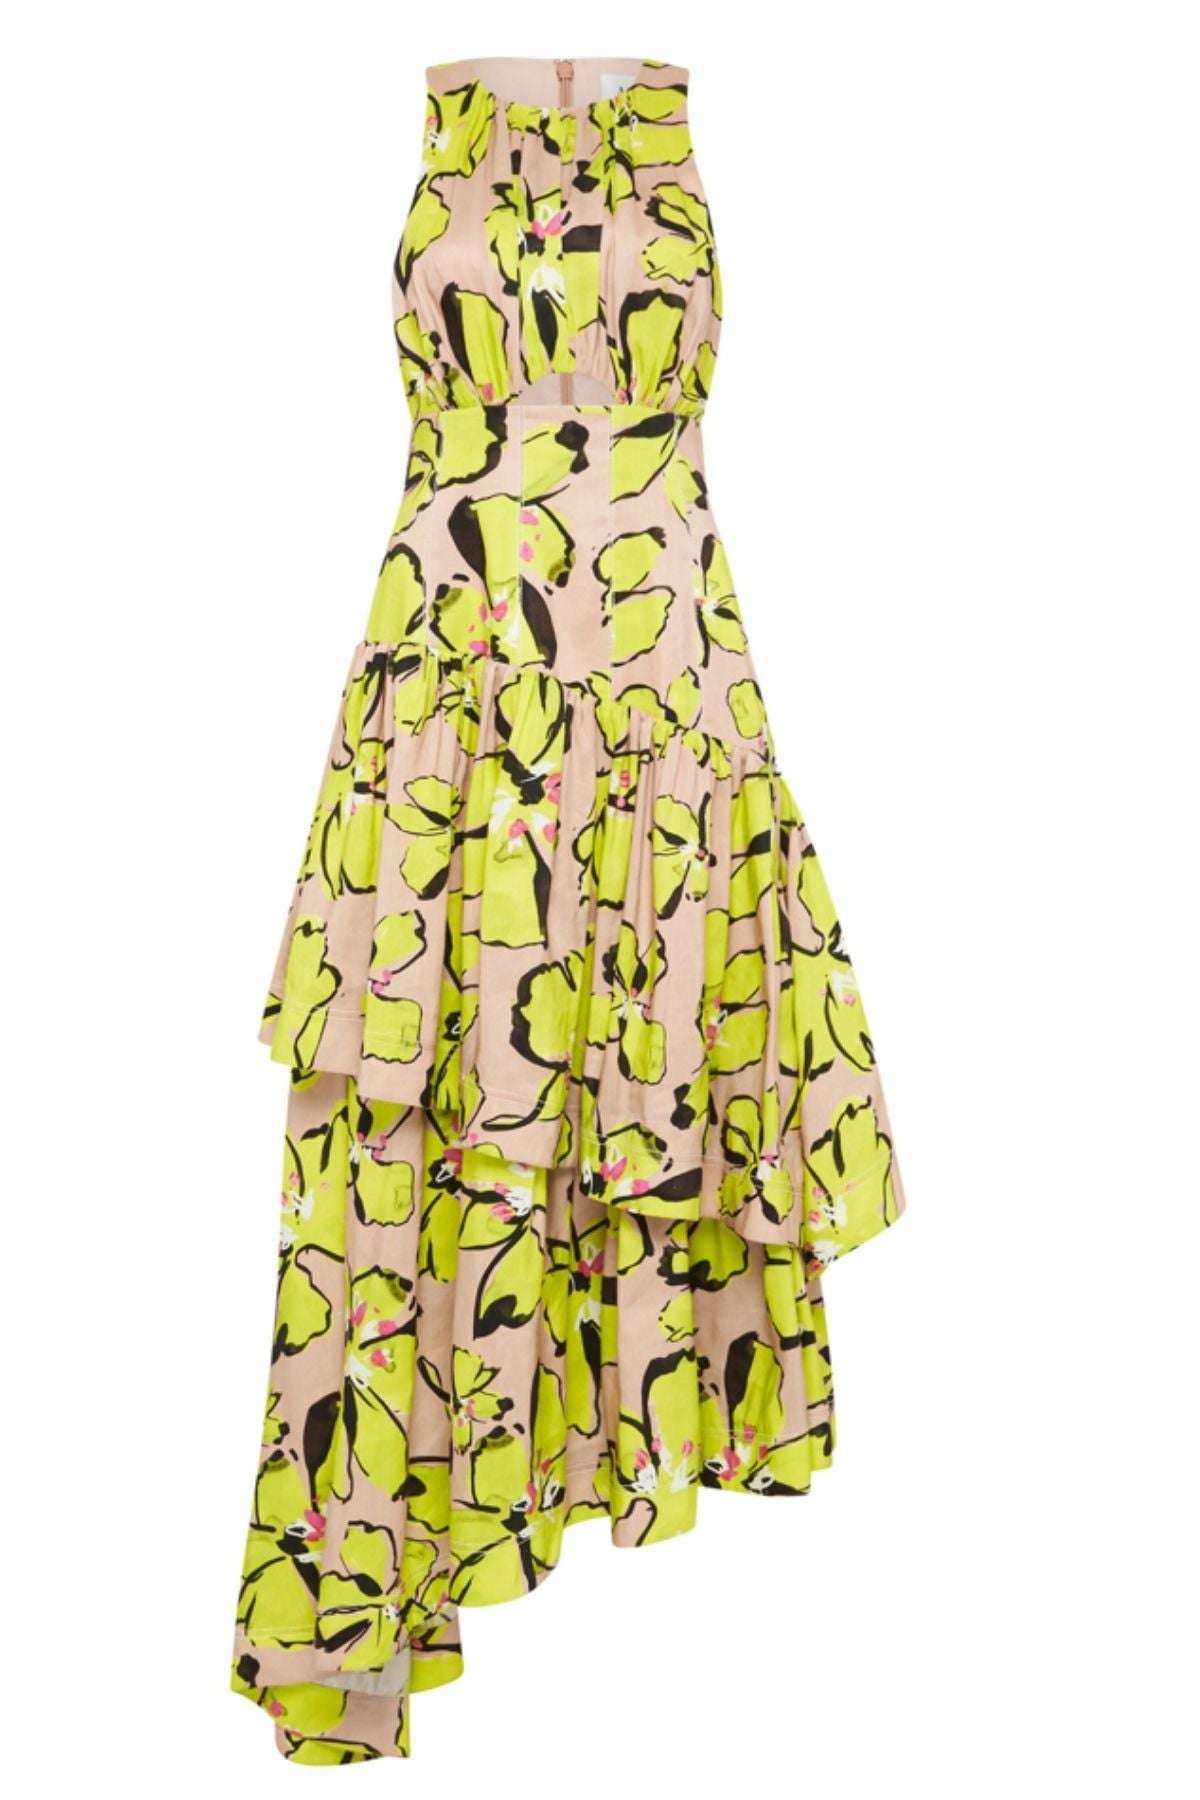 BUY IT AJE Pelicano Citrus Bloom Dress